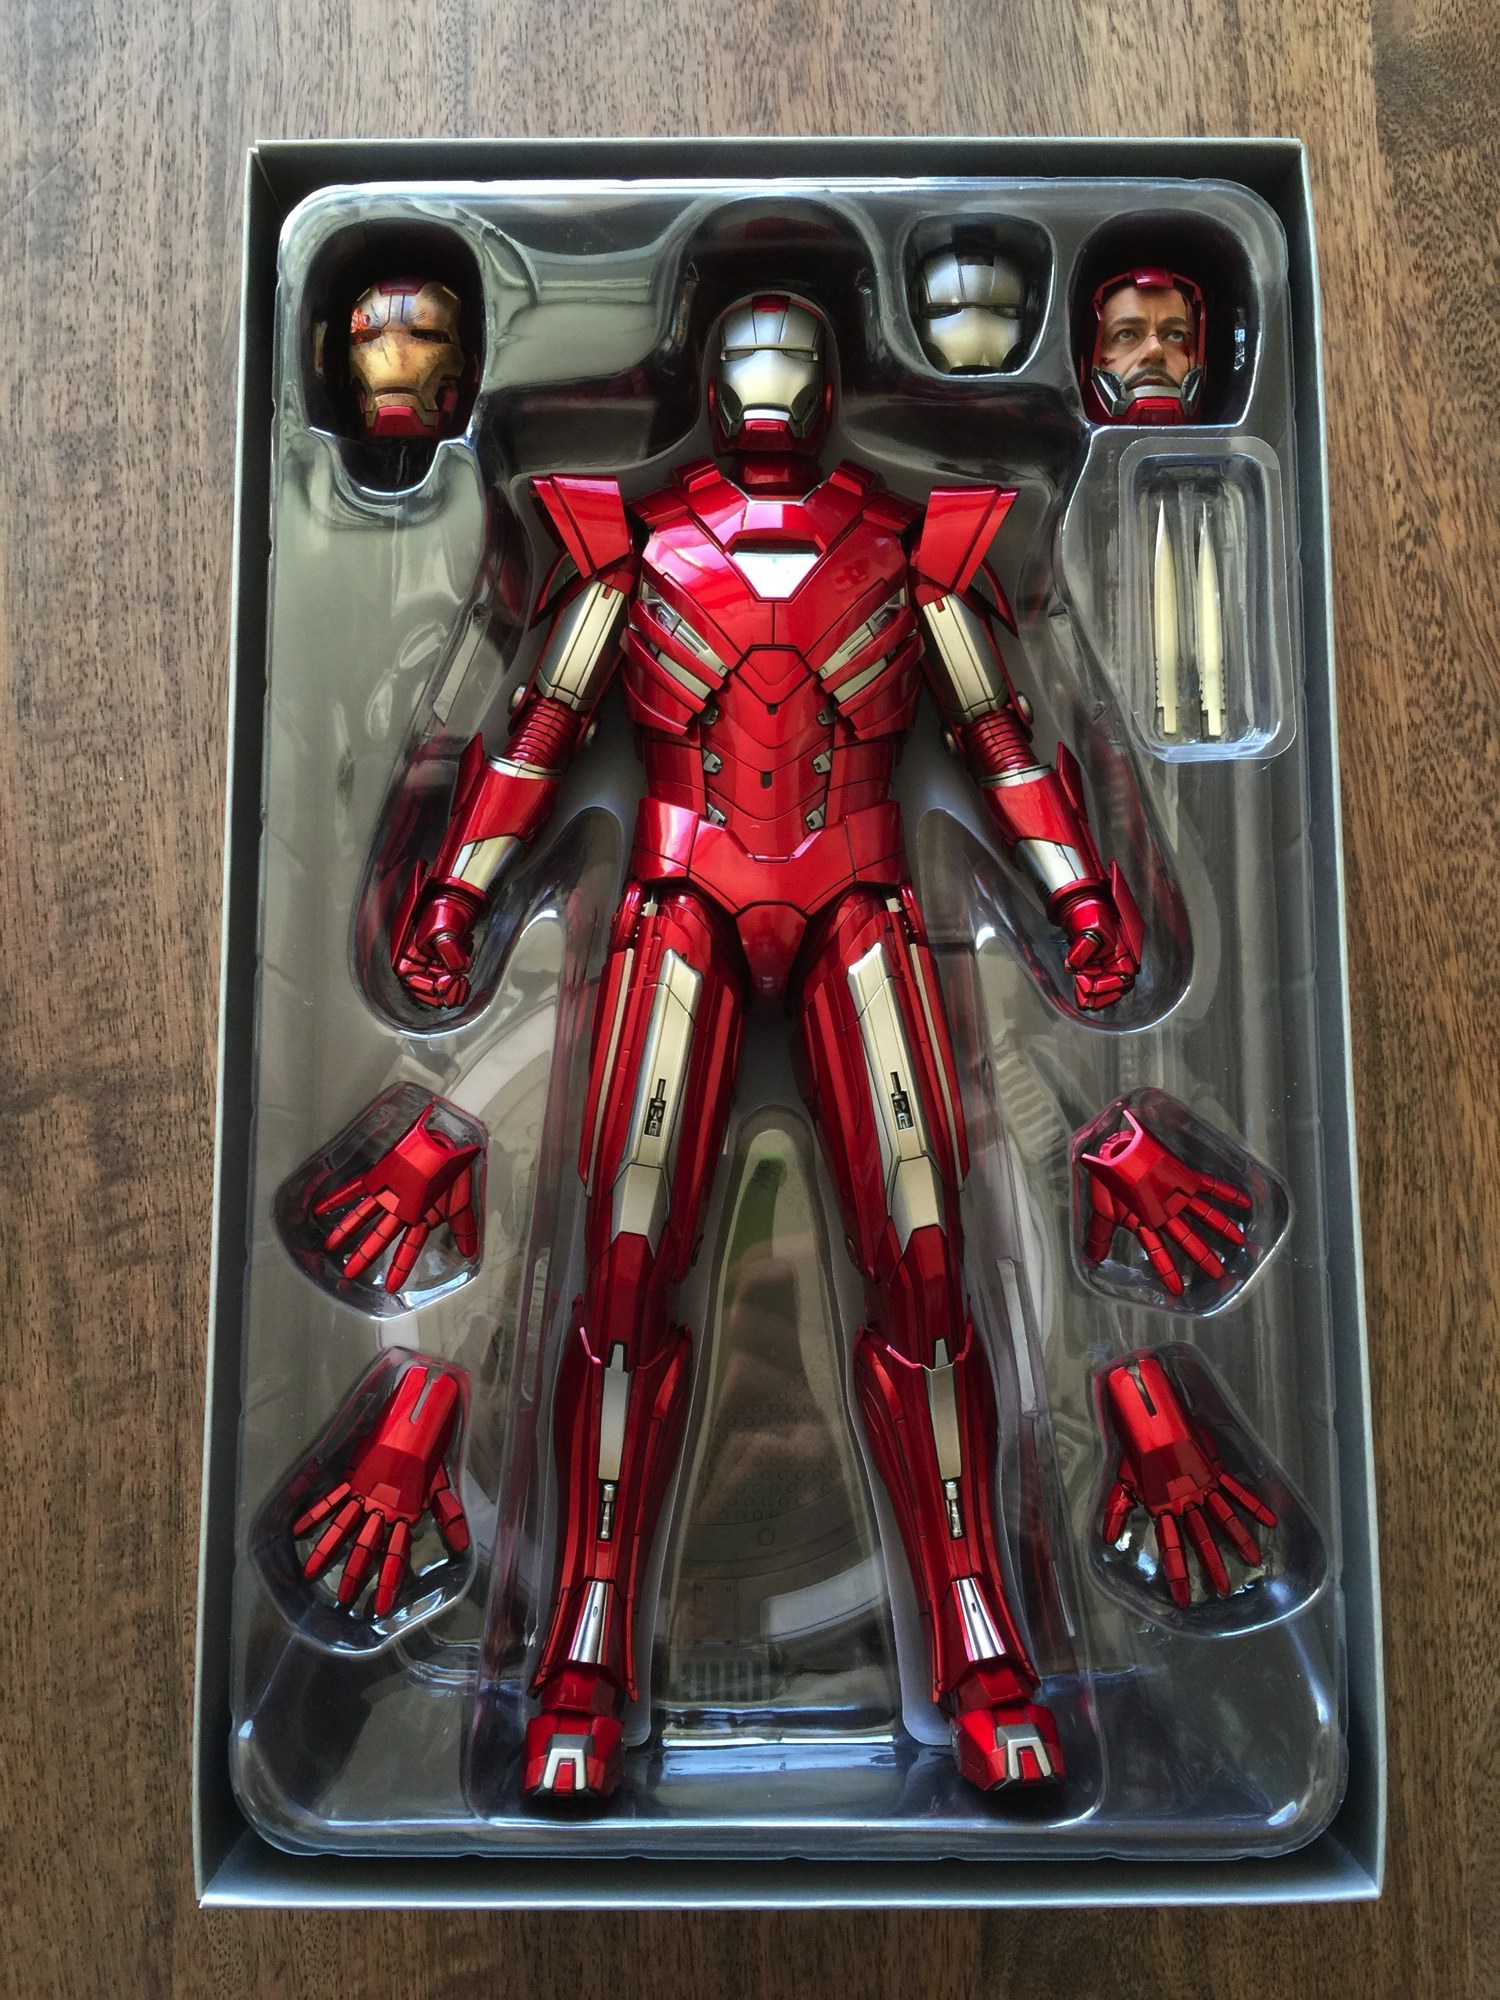 Cool Stuff Hot Toys Iron Man Mark 20 Sixth Scale Figure